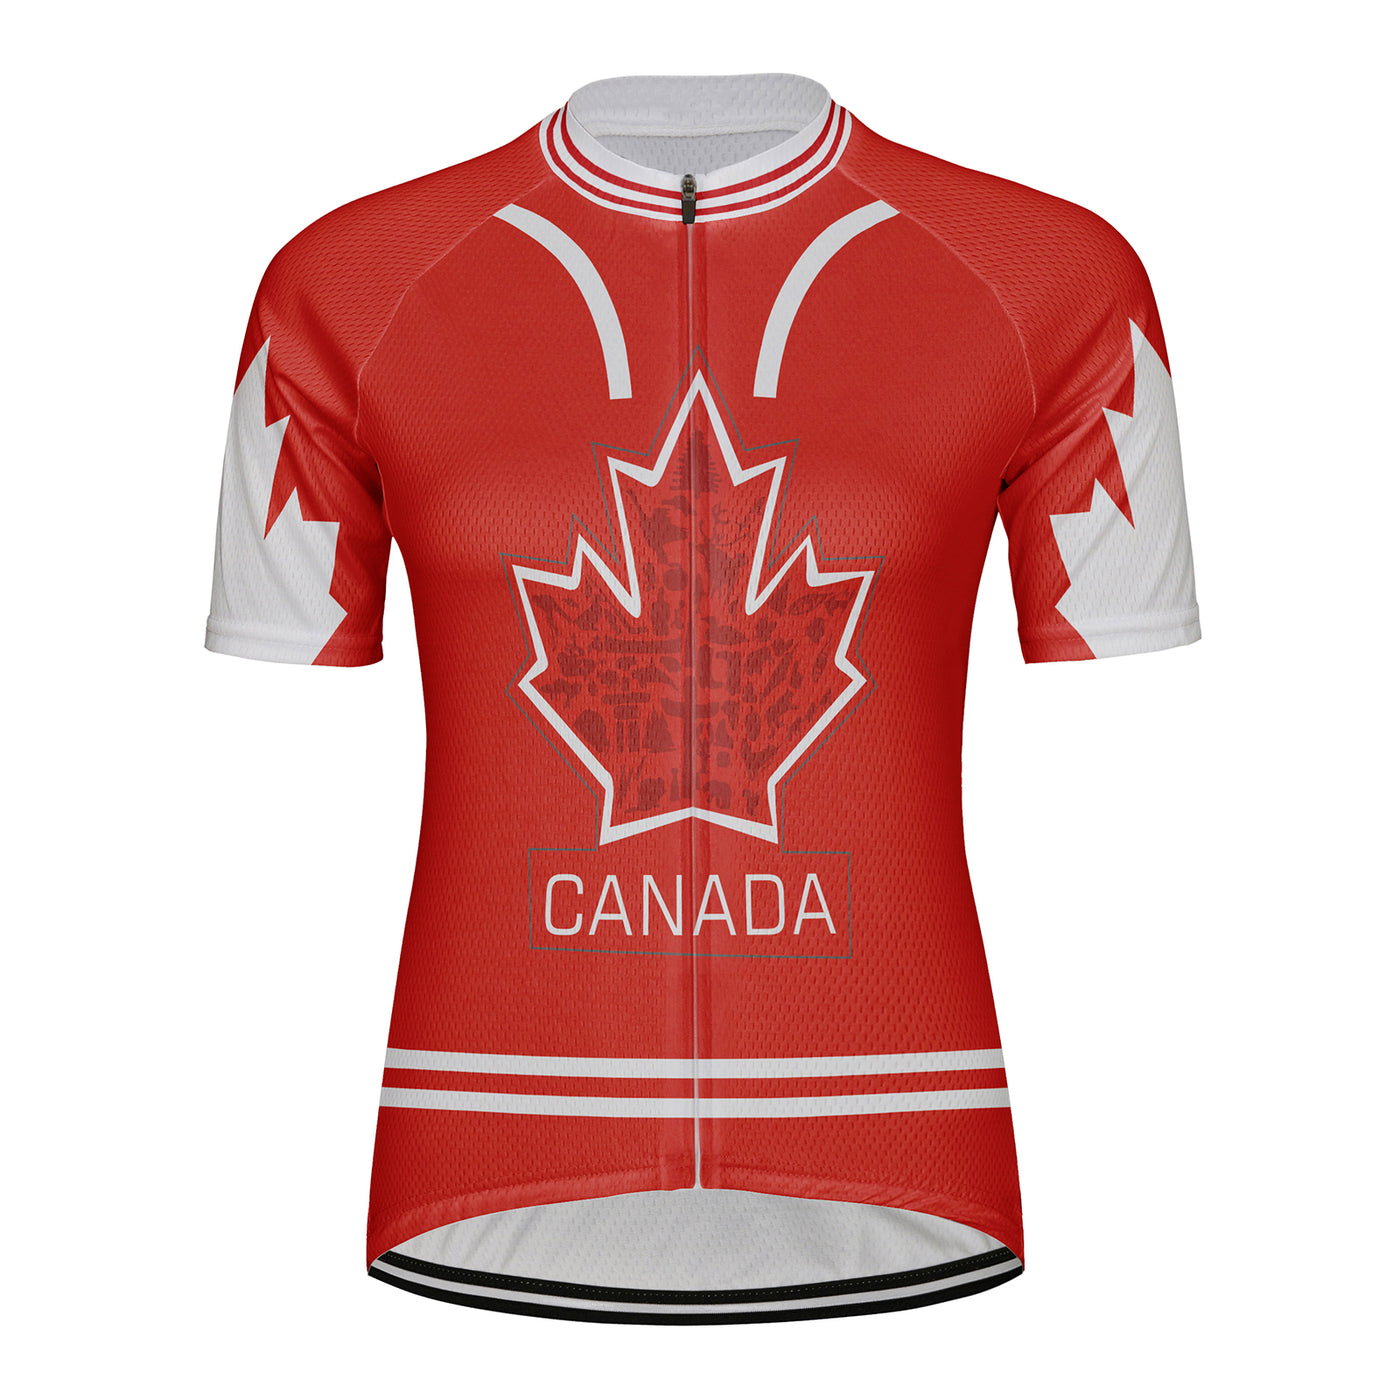 Customized Canada Women's Cycling Jersey Short Sleeve